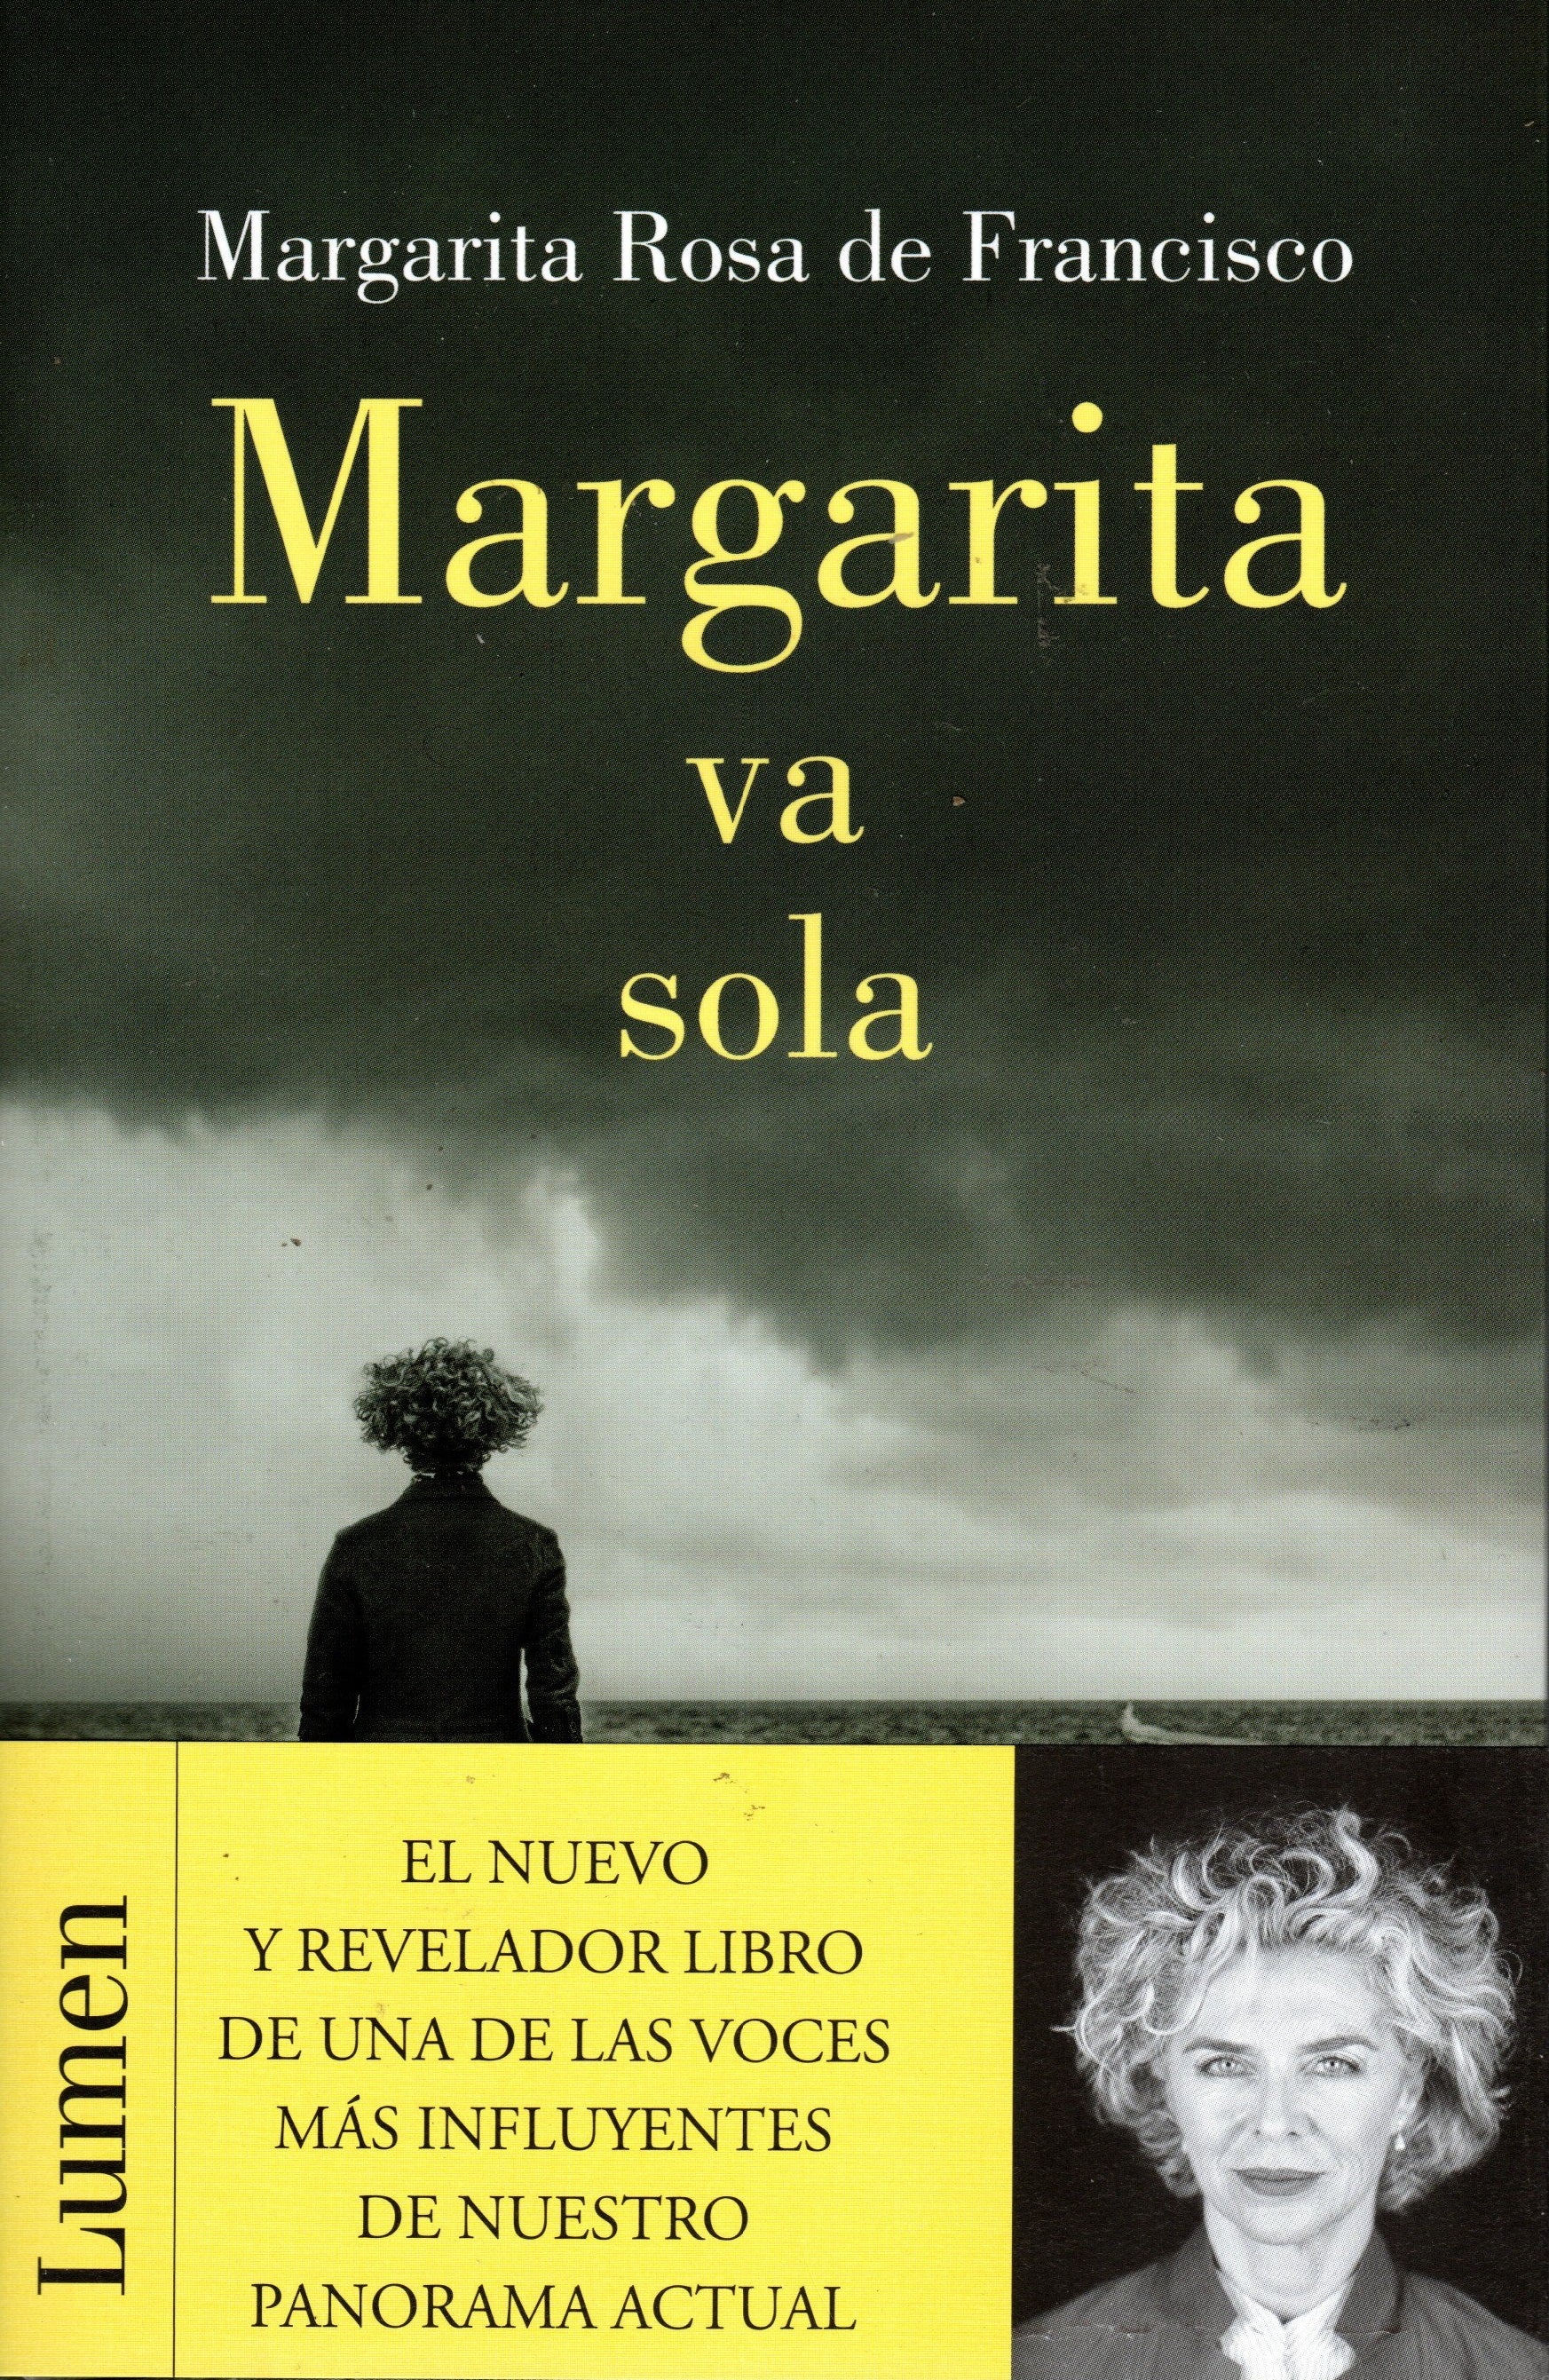 Libro Margarita Rosa De Francisco - Margarita Va Sola